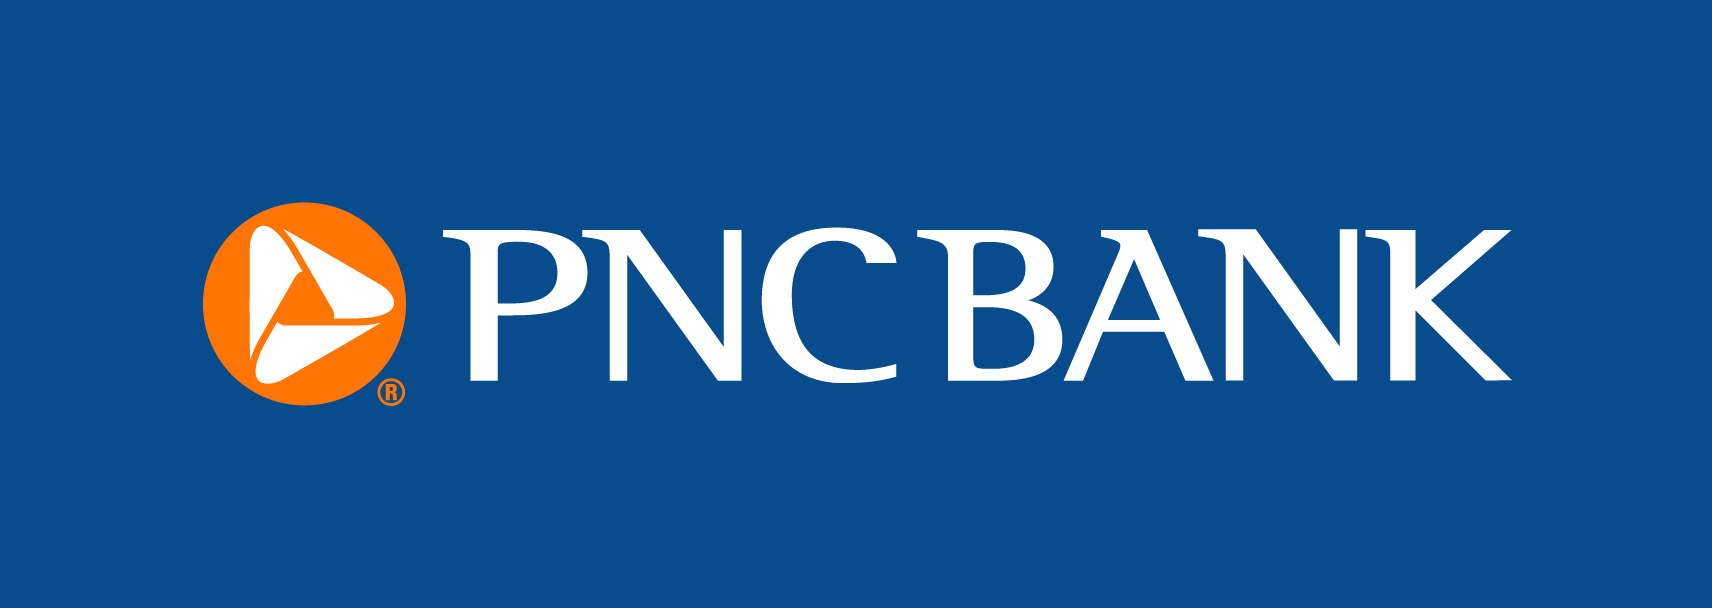 PNC Bank añade soporte para Microsoft Wallet en Windows 10 Mobile